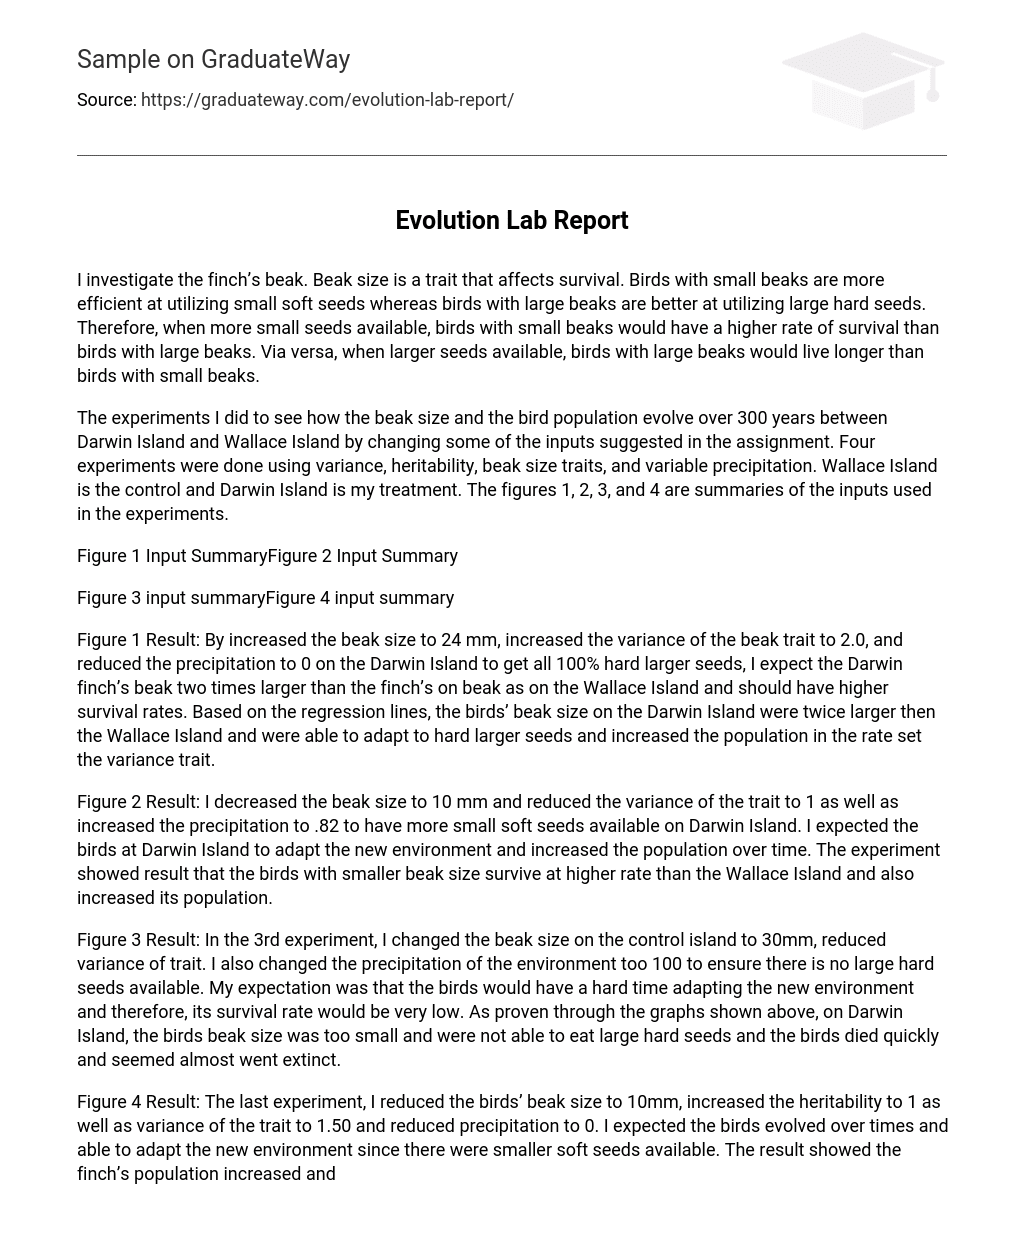 Evolution Lab Report